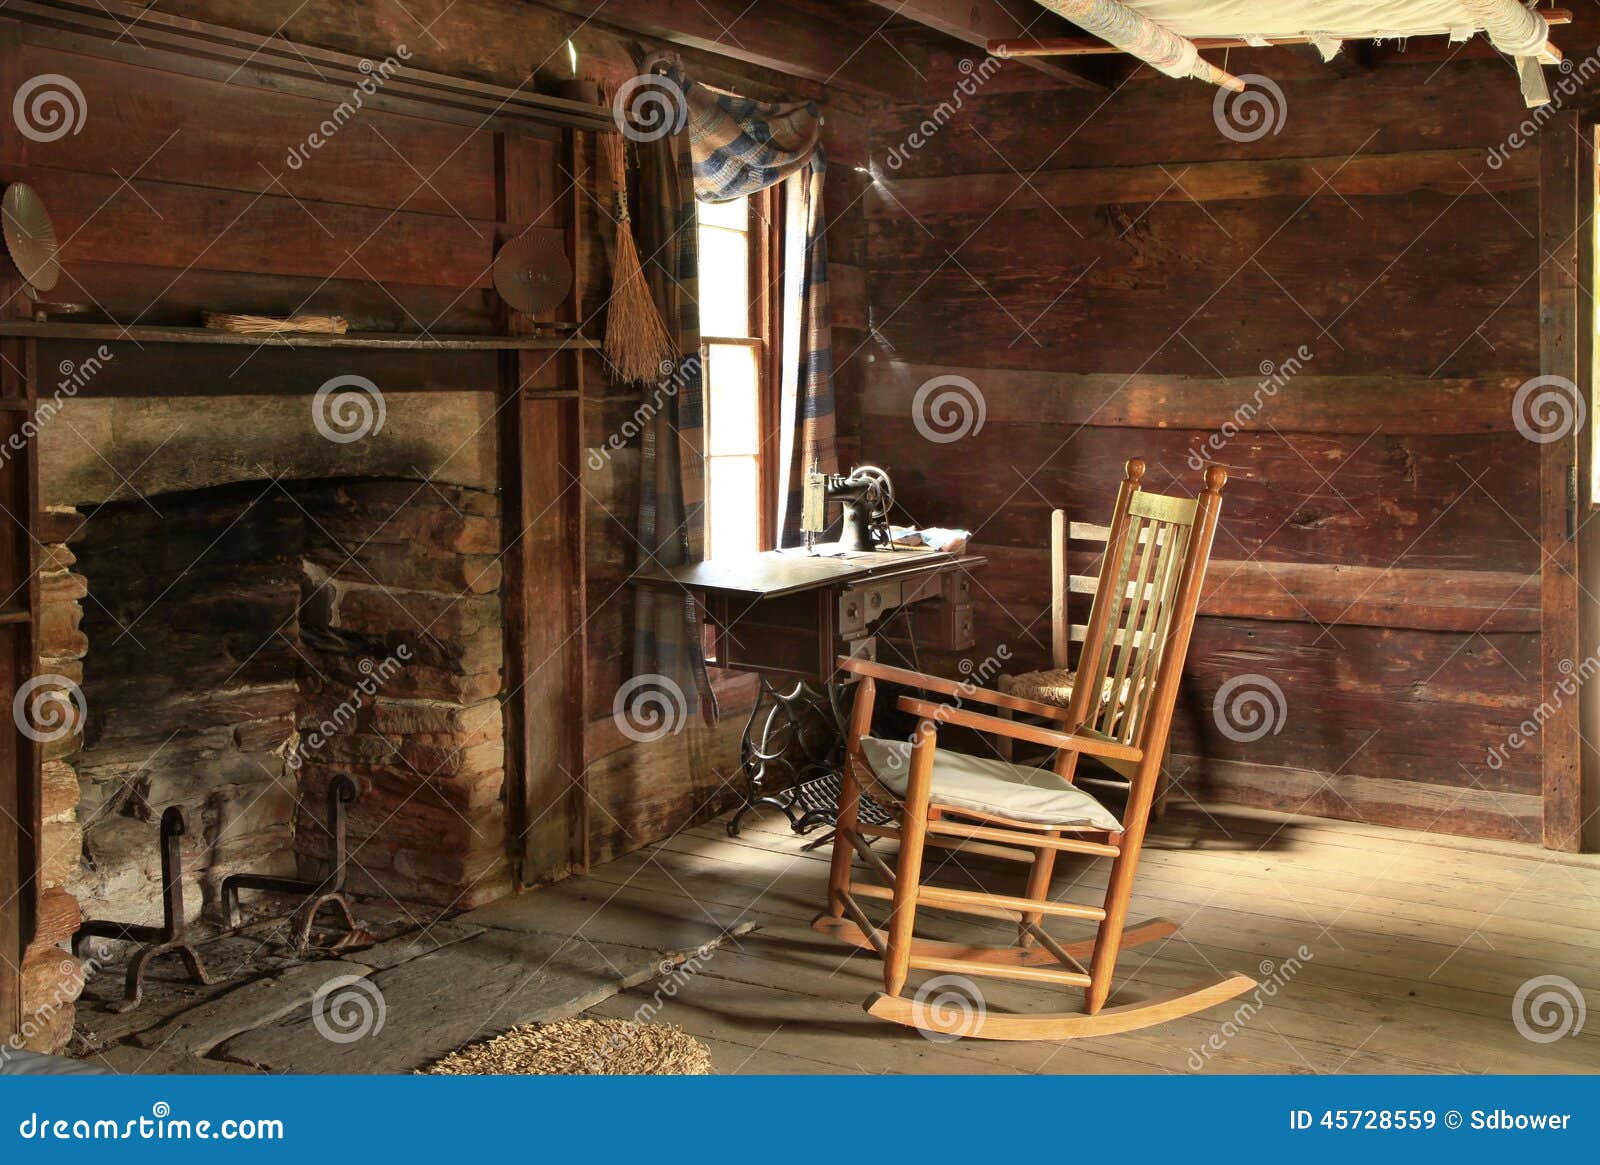 Old Pioneer Log Cabin Interiors